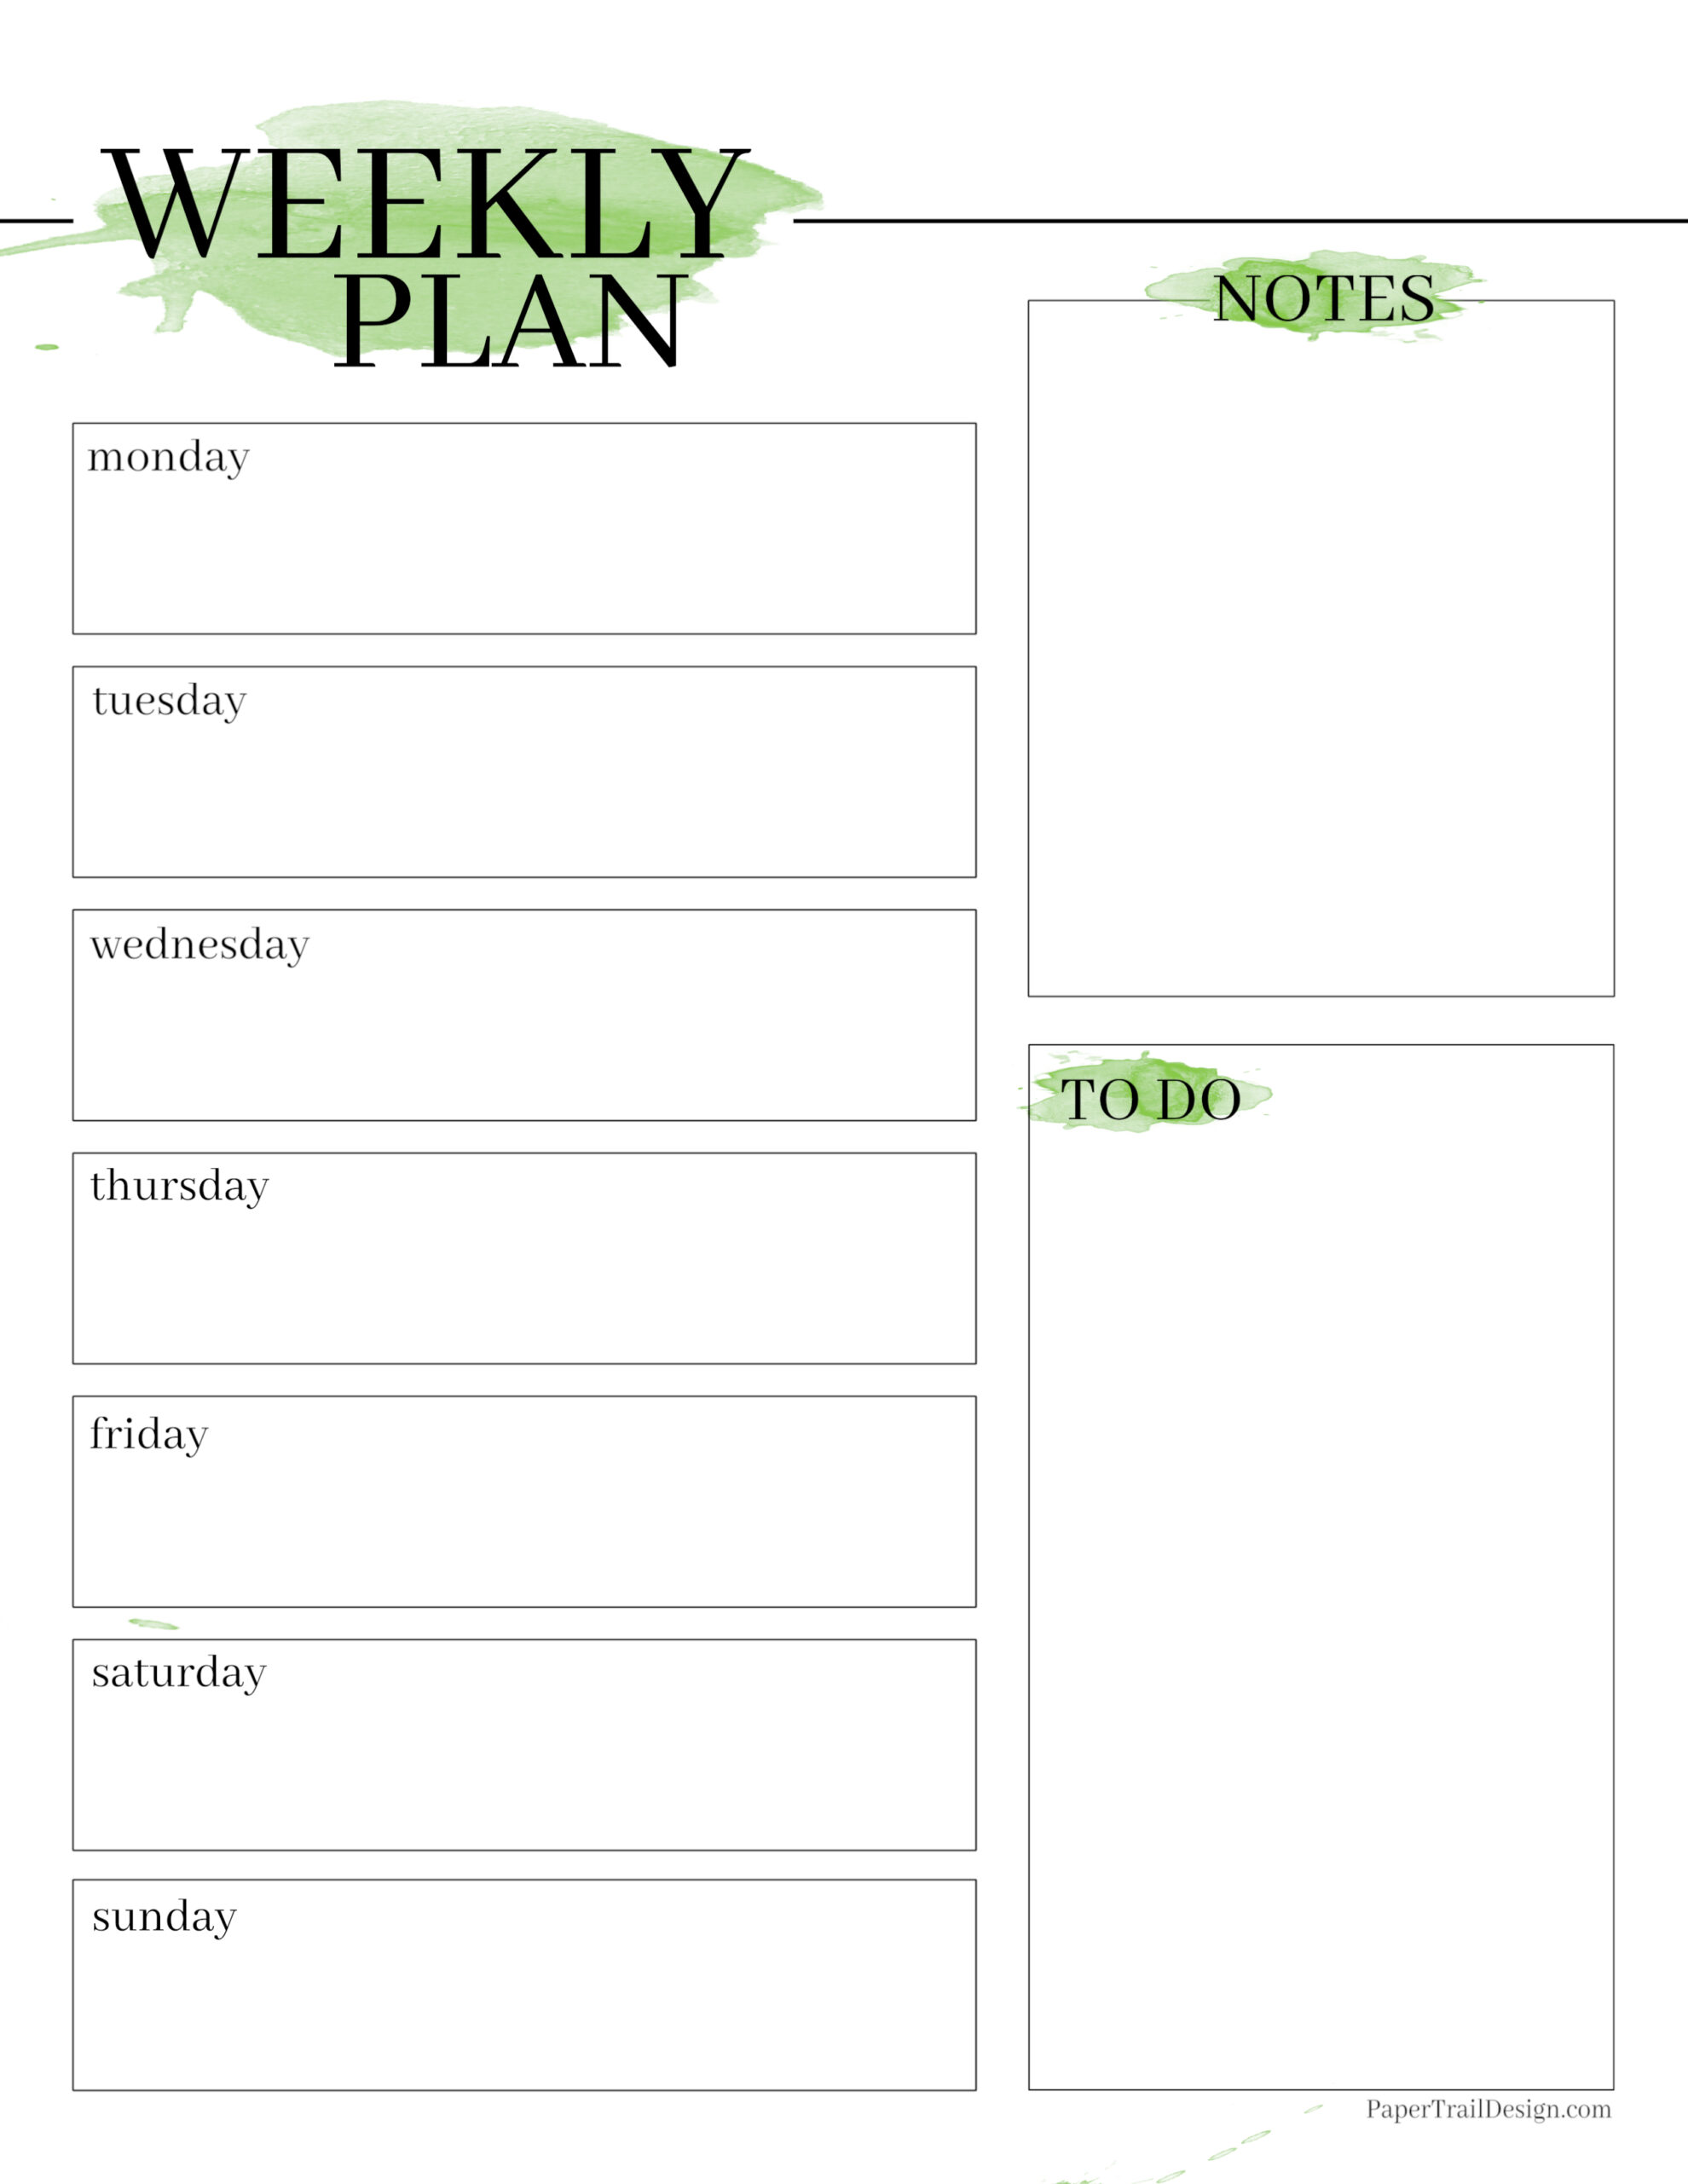 Instant Download Planner Template Printable Light Watercolor Weekly Planner Printables